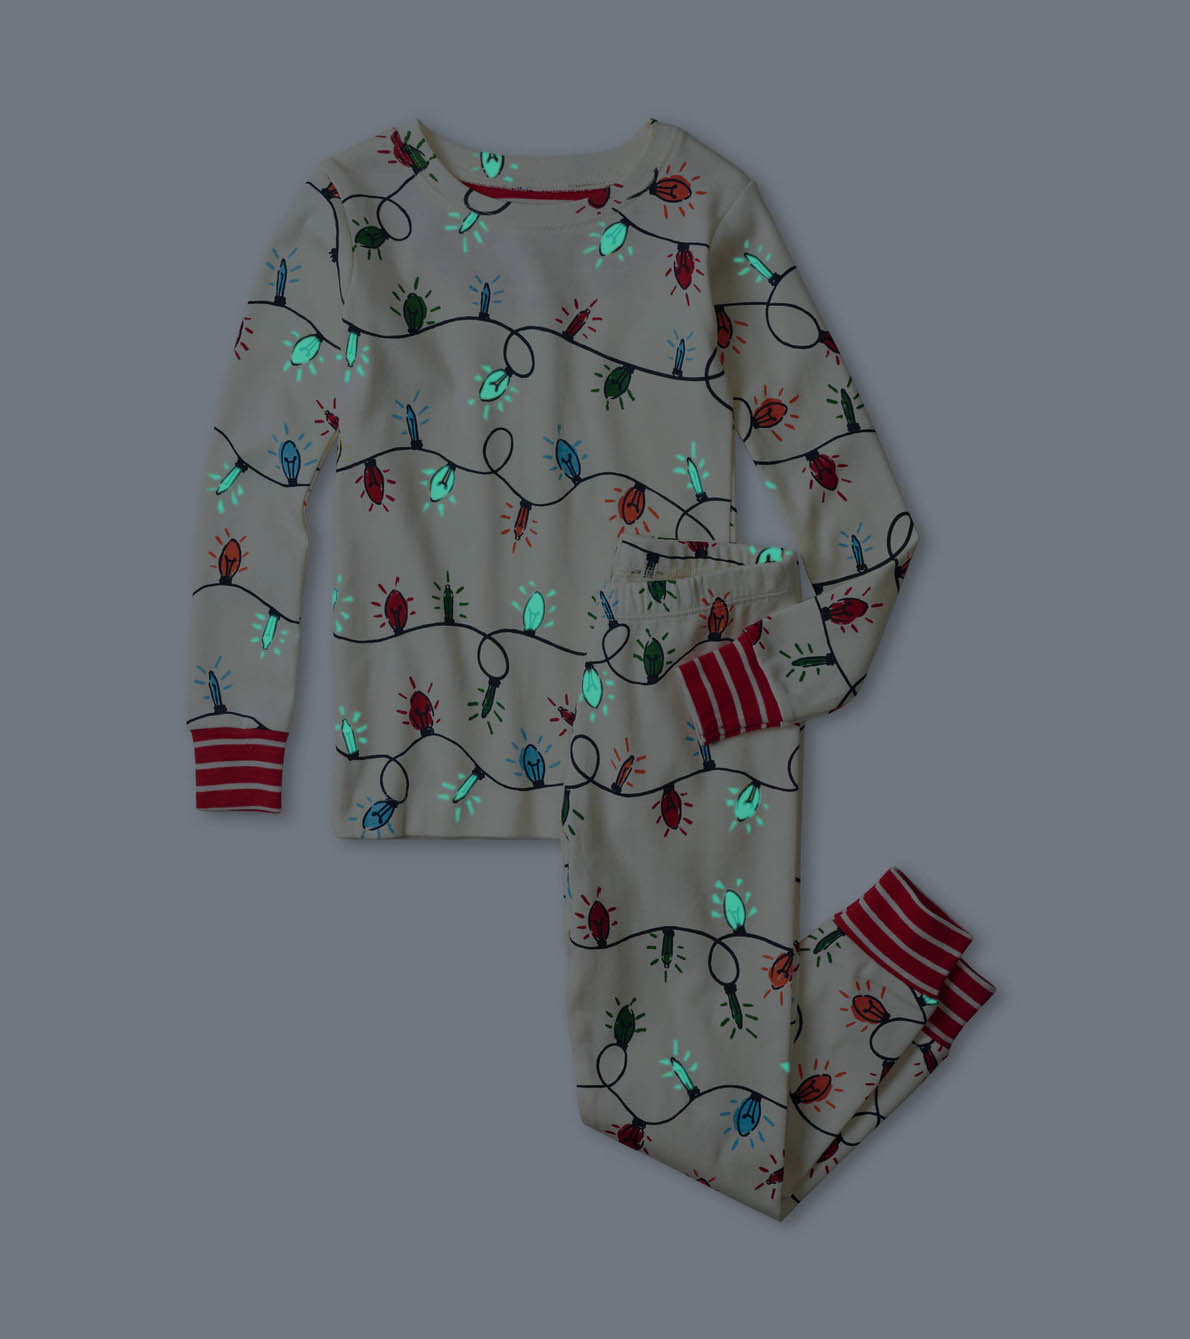 View larger image of Glowing Holiday Lights Pajama Set